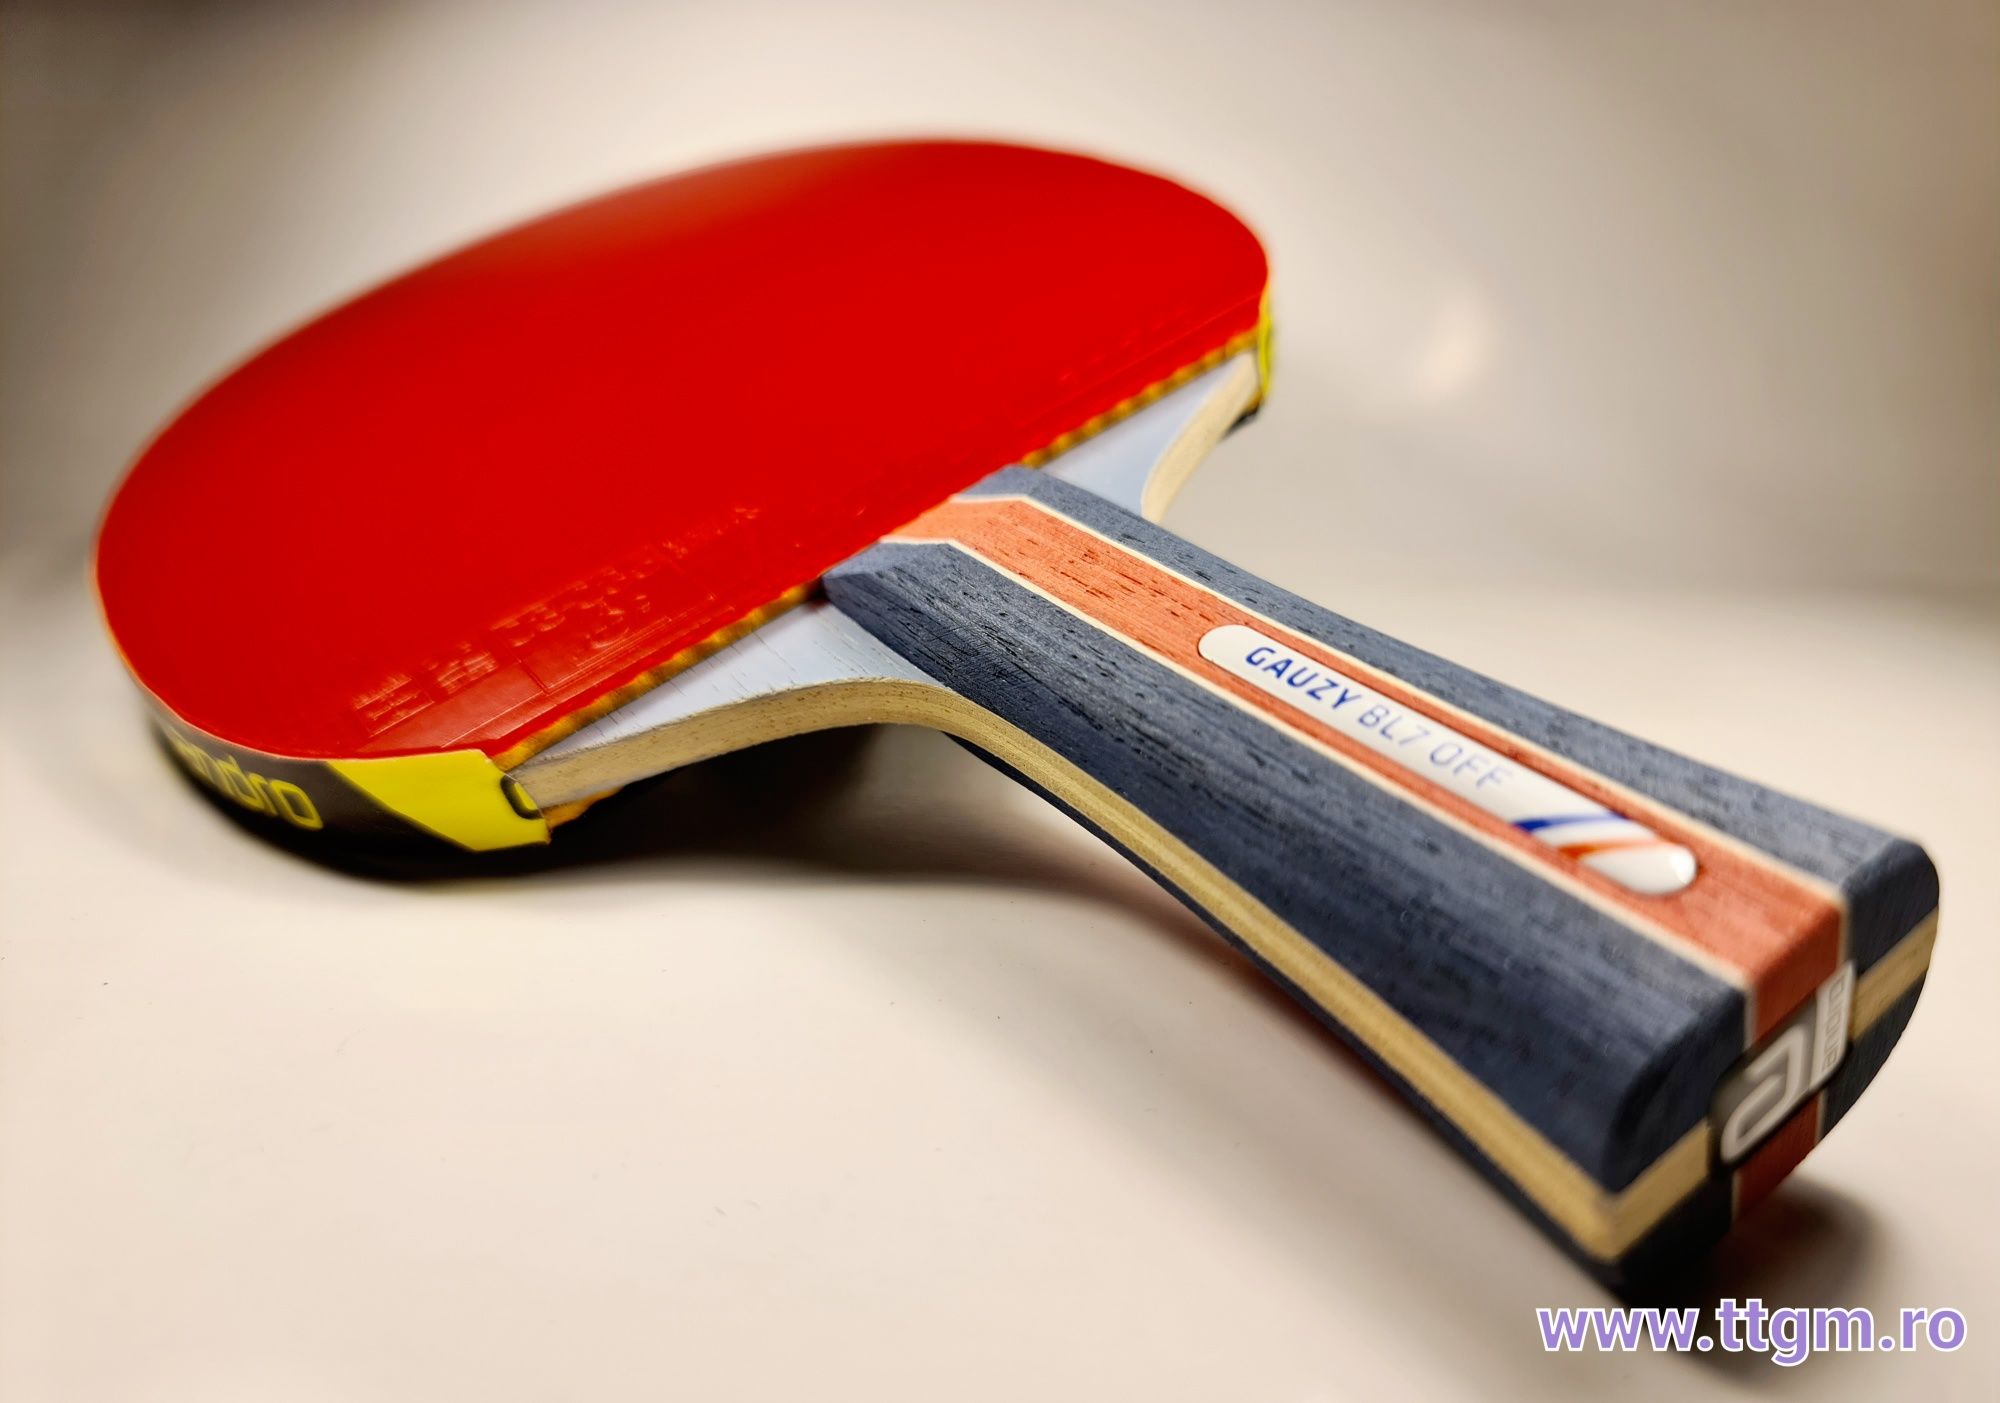 Paleta profesionala tenis de masa (ping pong) andro bl7/andro gtt45